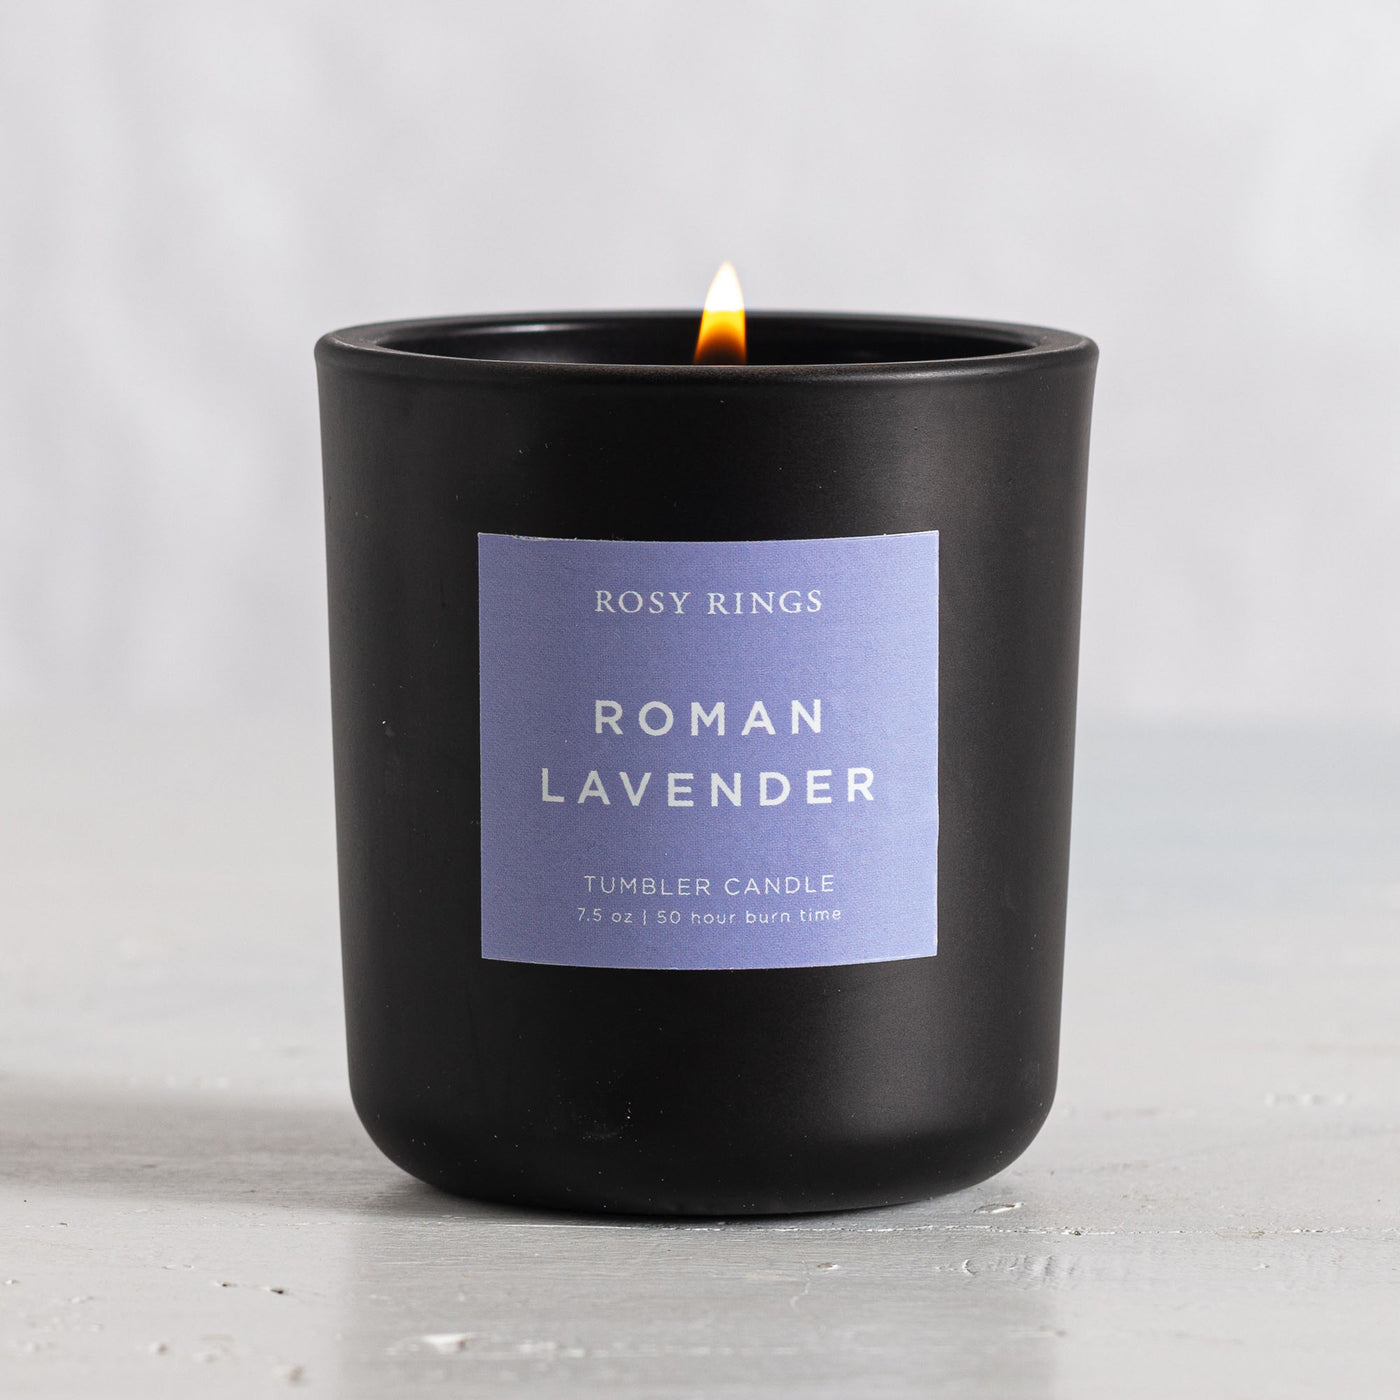 Roman Lavender Boxed Glass Tumbler Candle